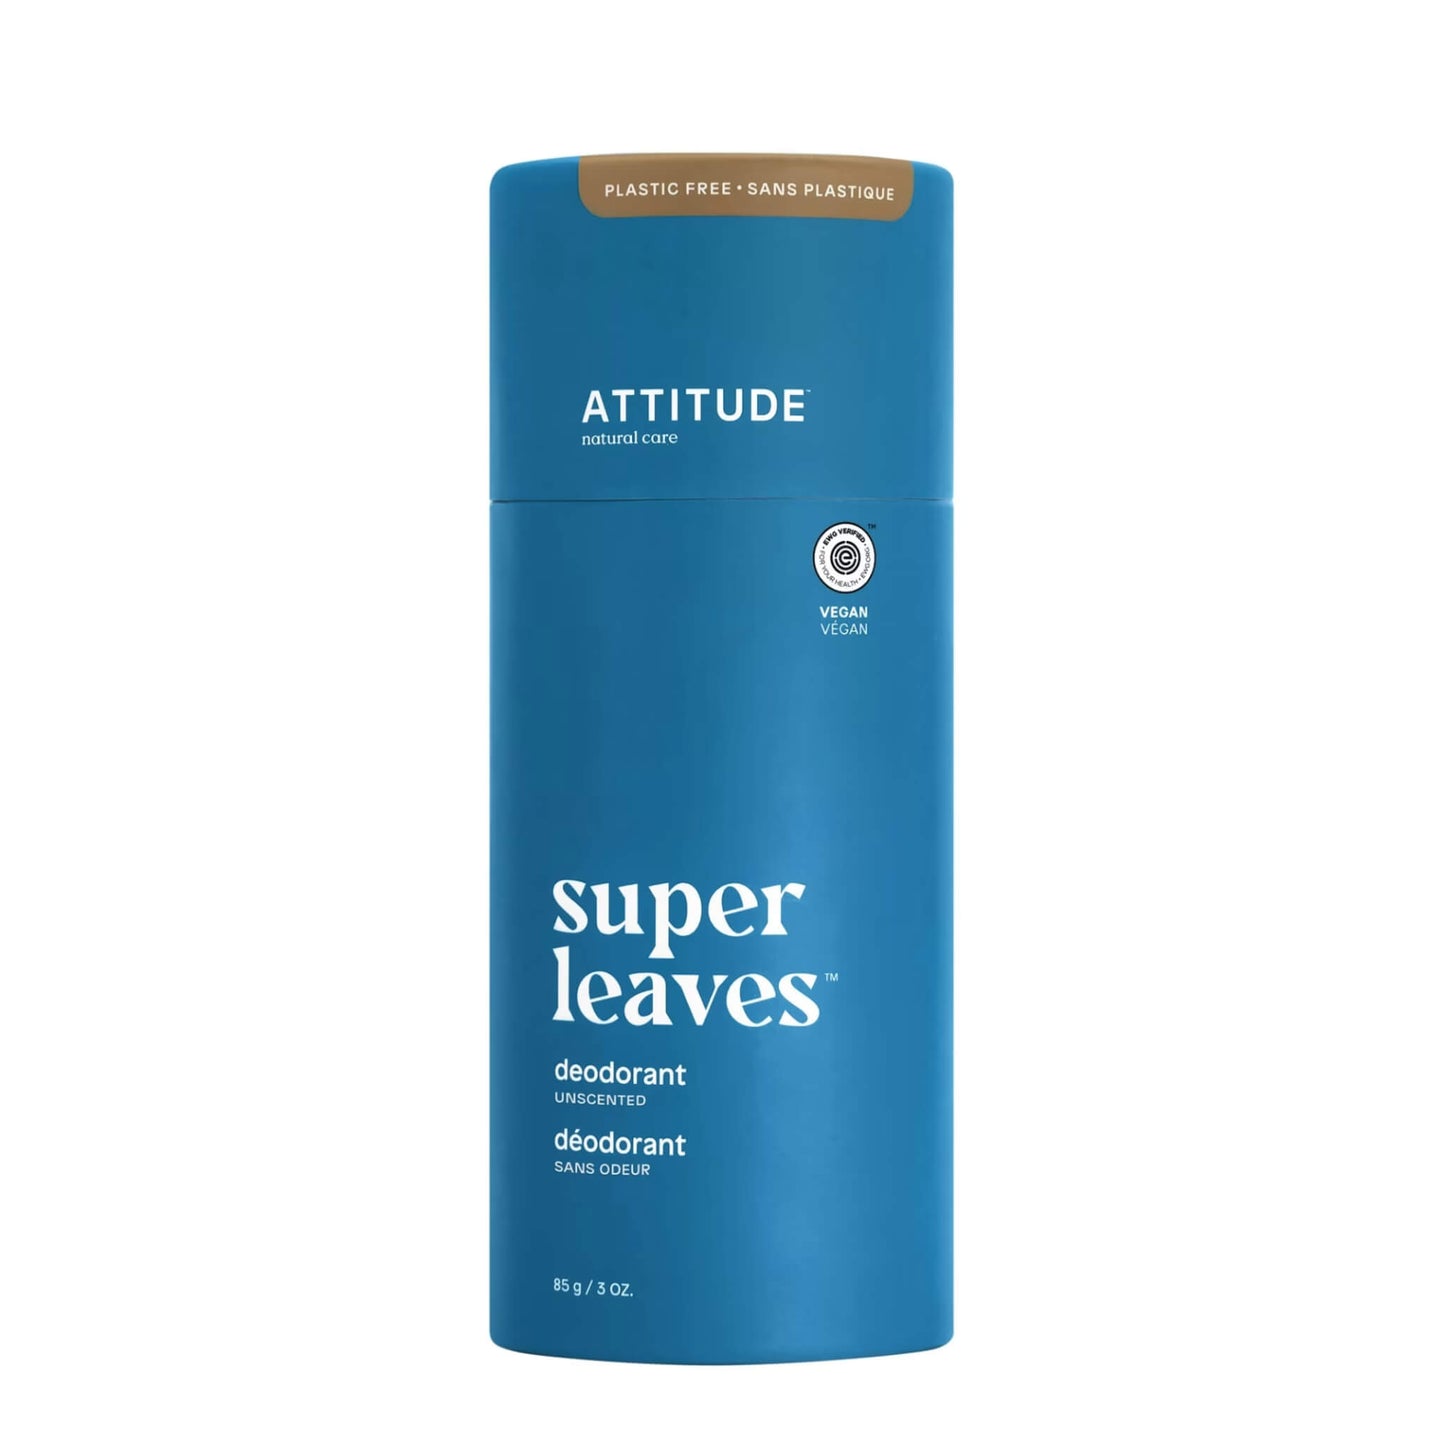 Attitude's zero waste unscented deodorant for sensitive skin. Compostable cardboard applicator tube